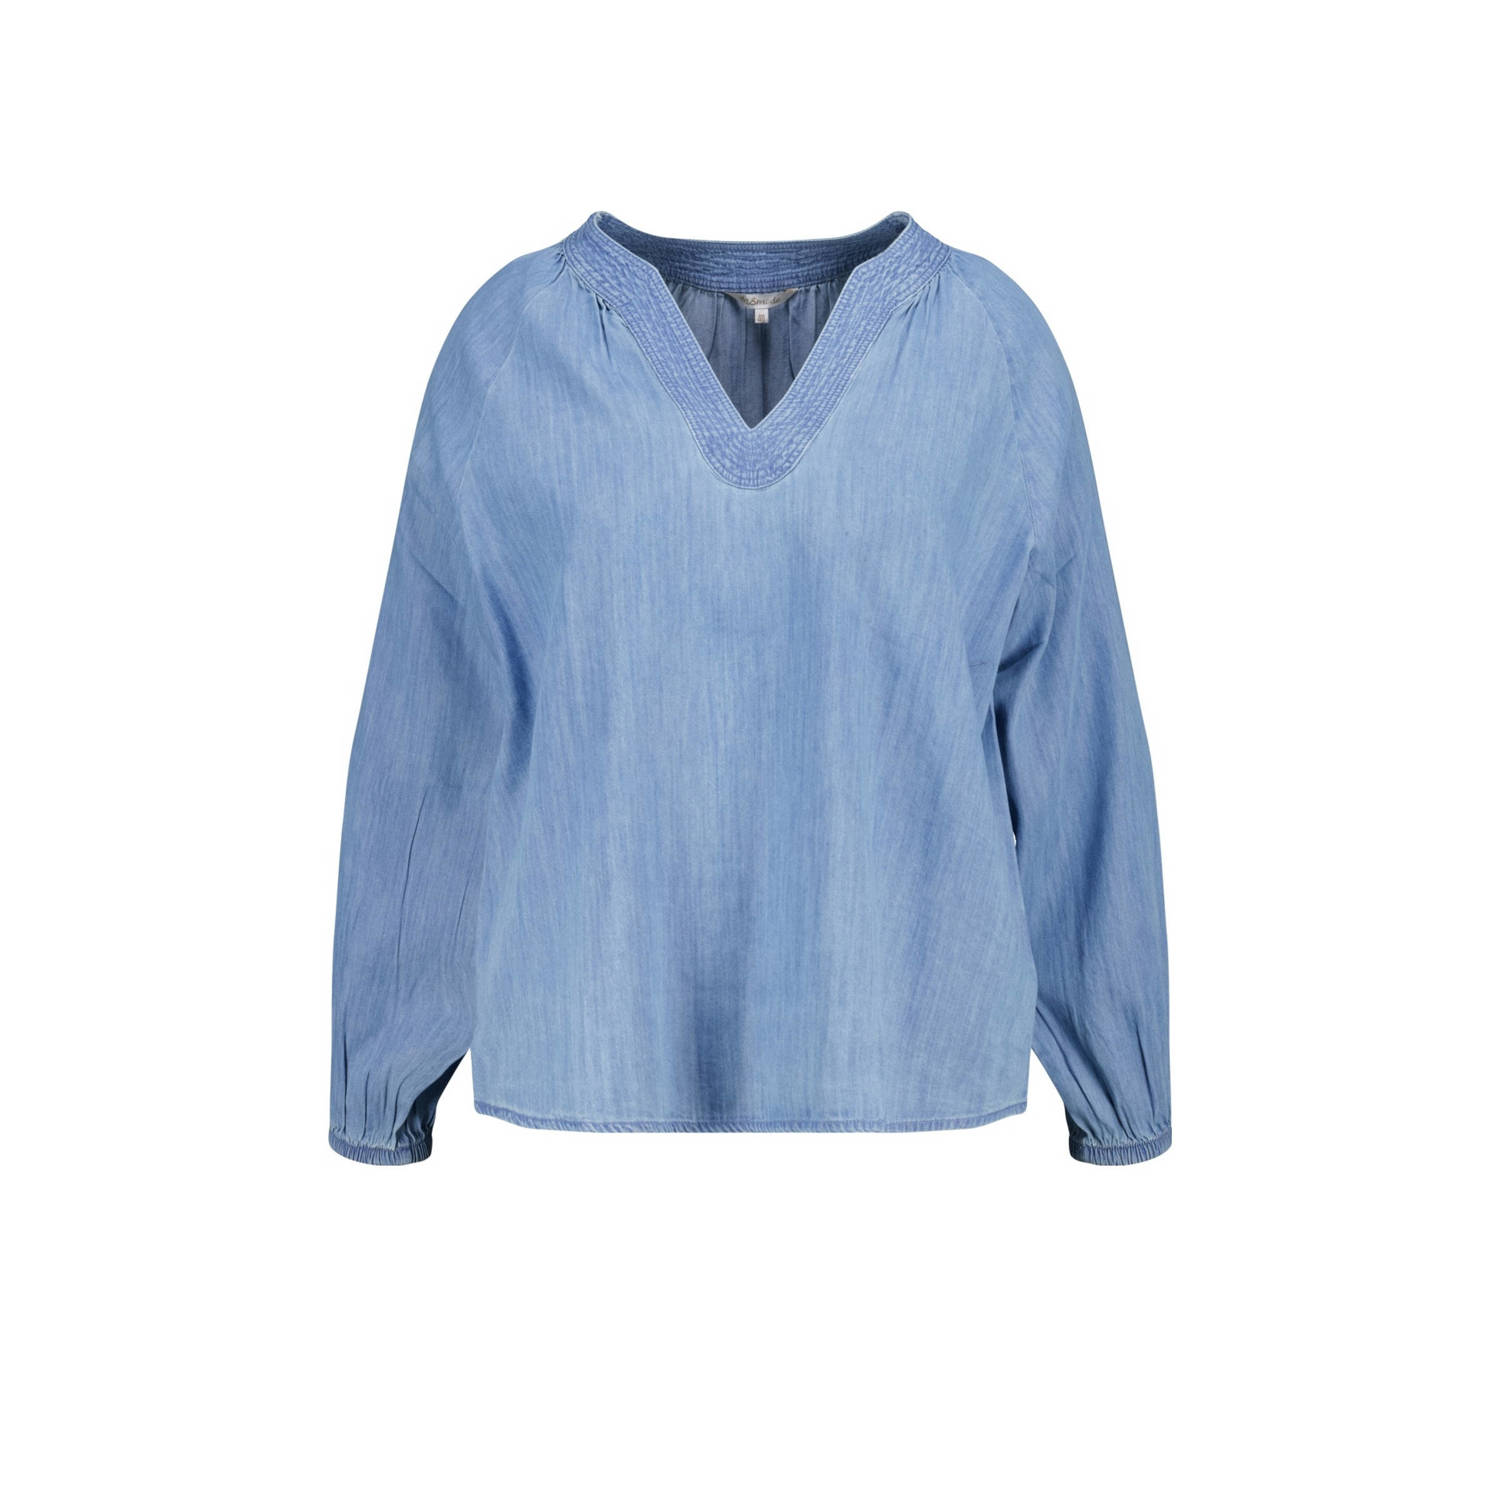 MS Mode blousetop medium blue denim